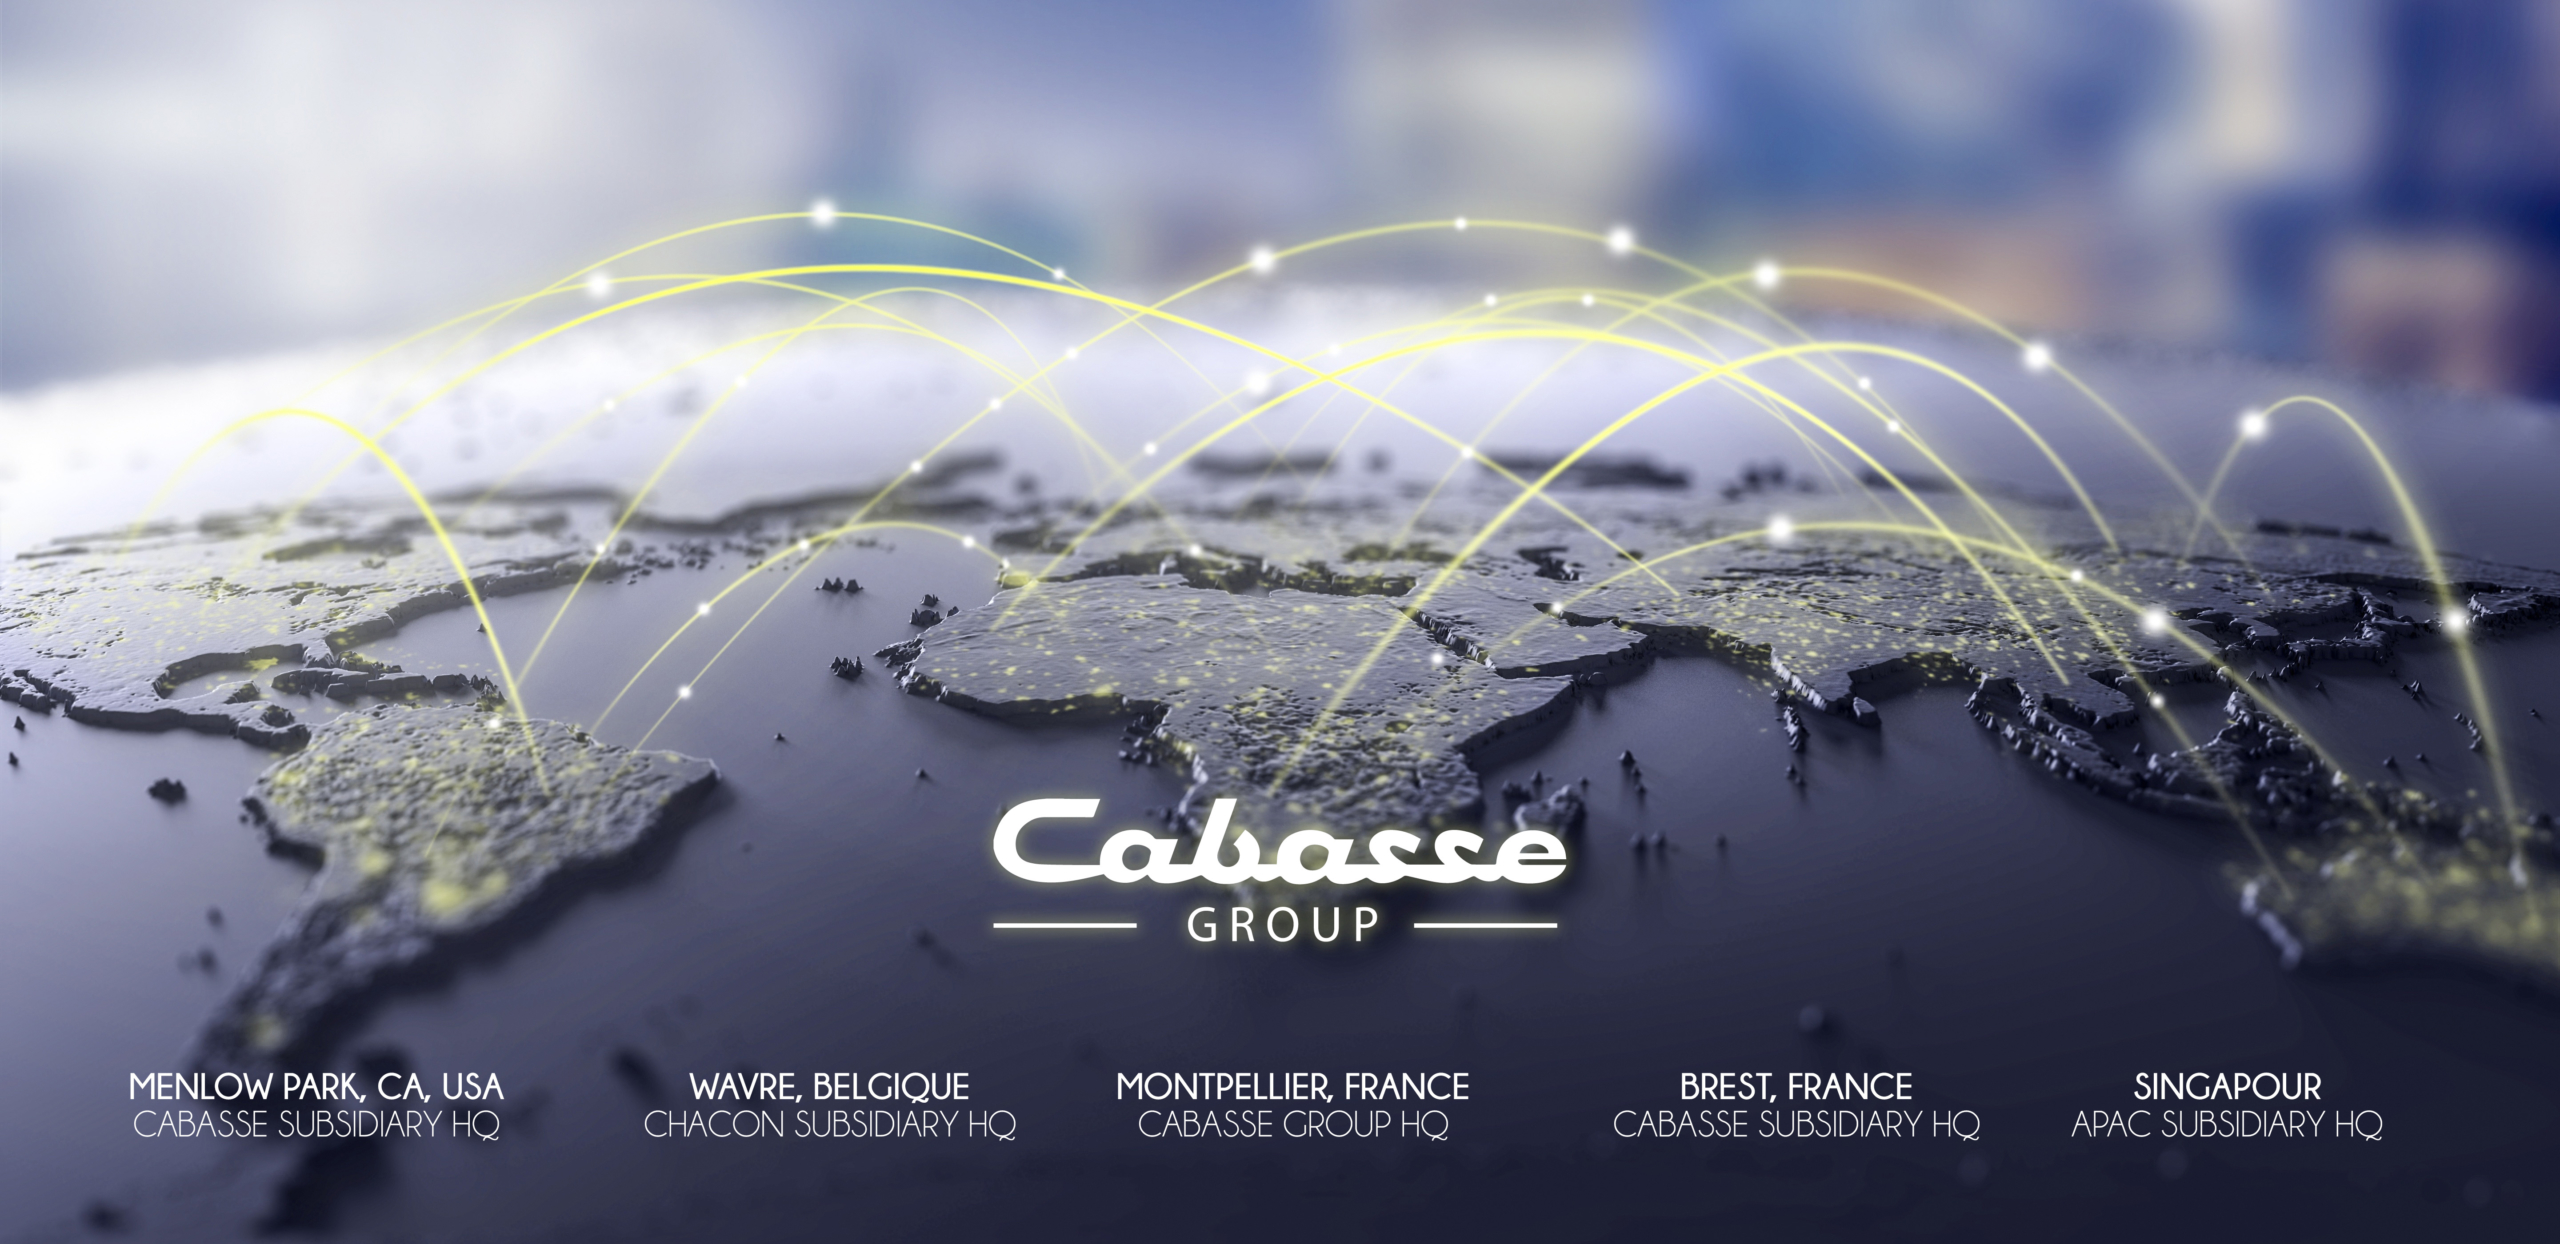 Cabasse Group around the world